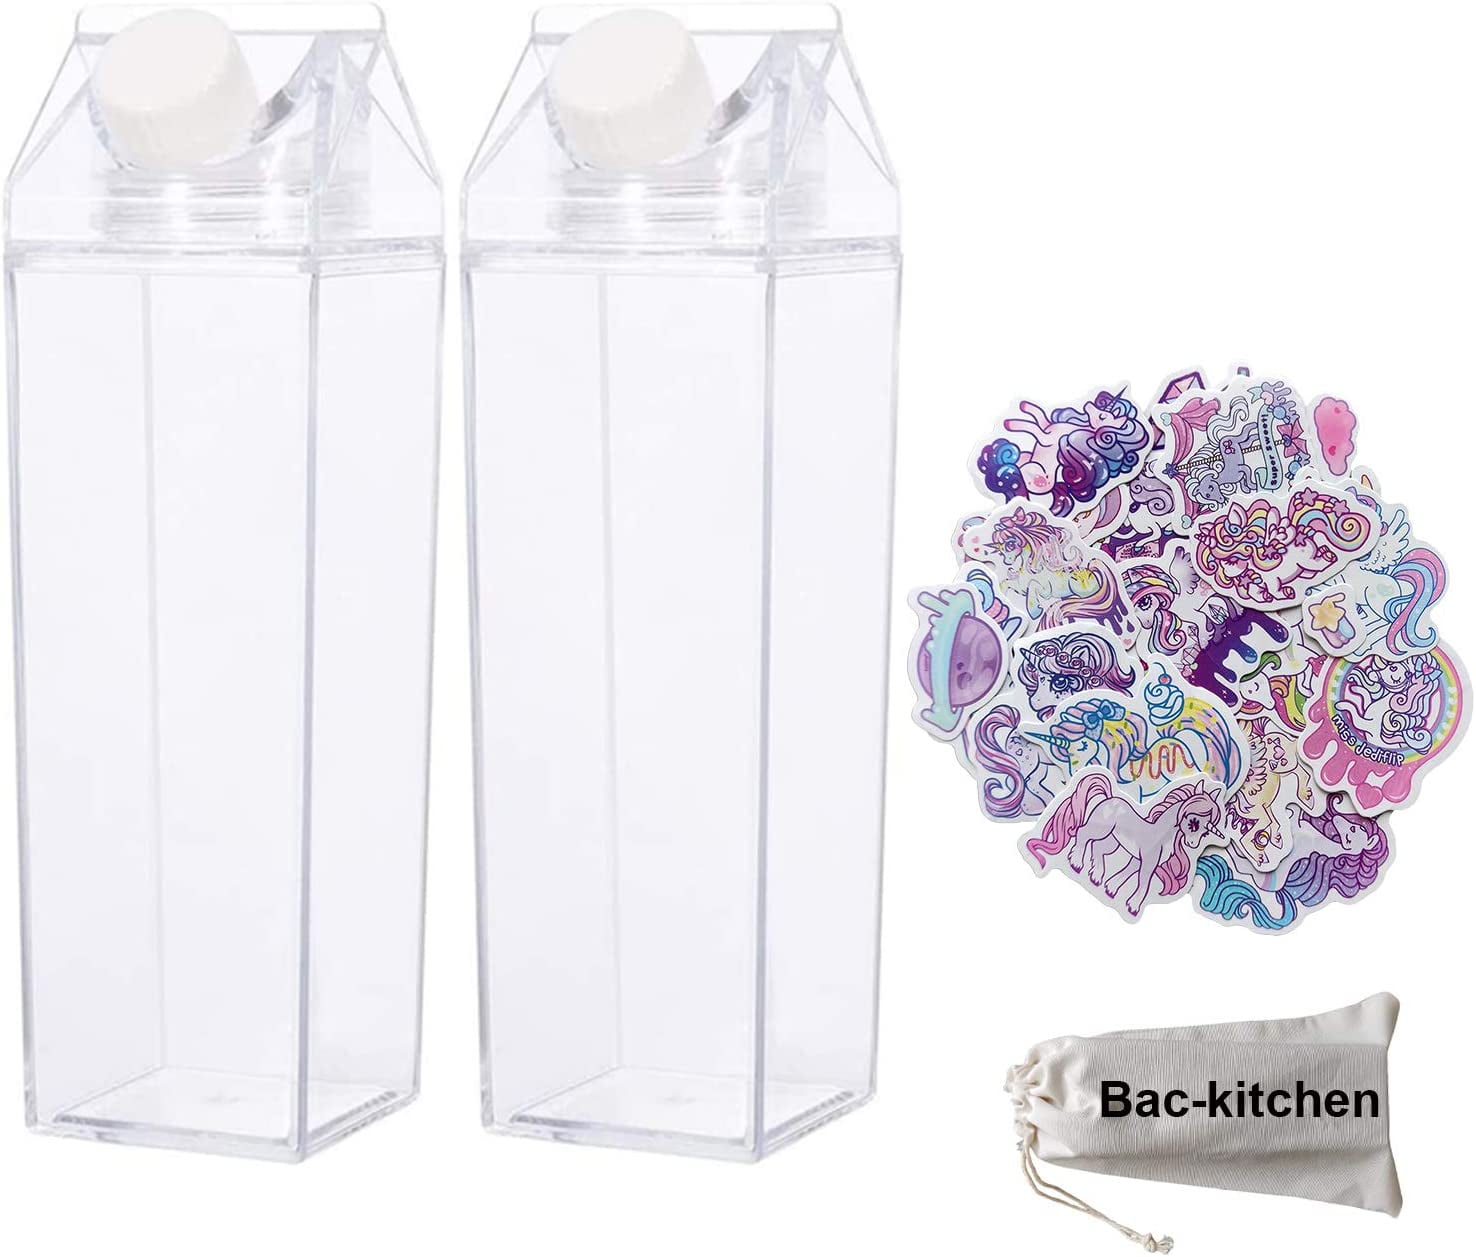 PREMIUM SIP Milk Carton Water Bottles 6 Pack - 17OZ/500ml Each - Clear  Plastic, Unique, Stylish Desi…See more PREMIUM SIP Milk Carton Water  Bottles 6